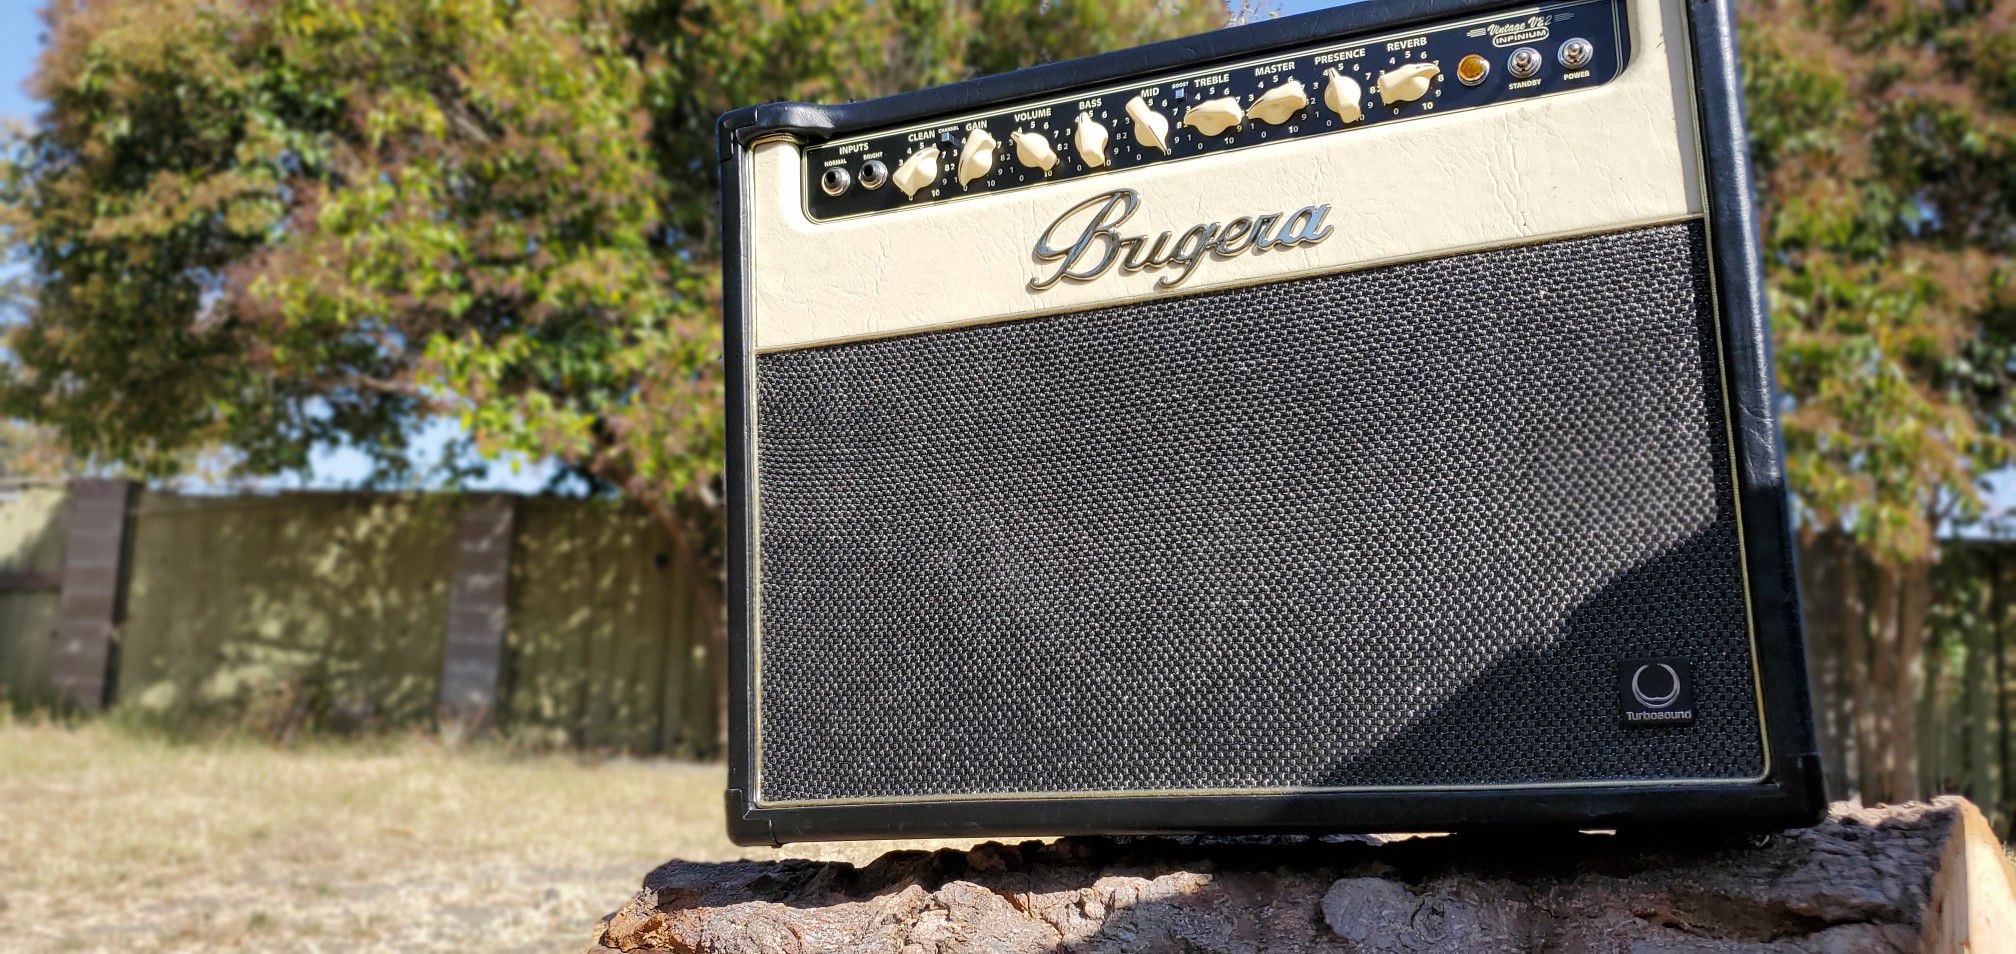 Bugera guitar amplifier